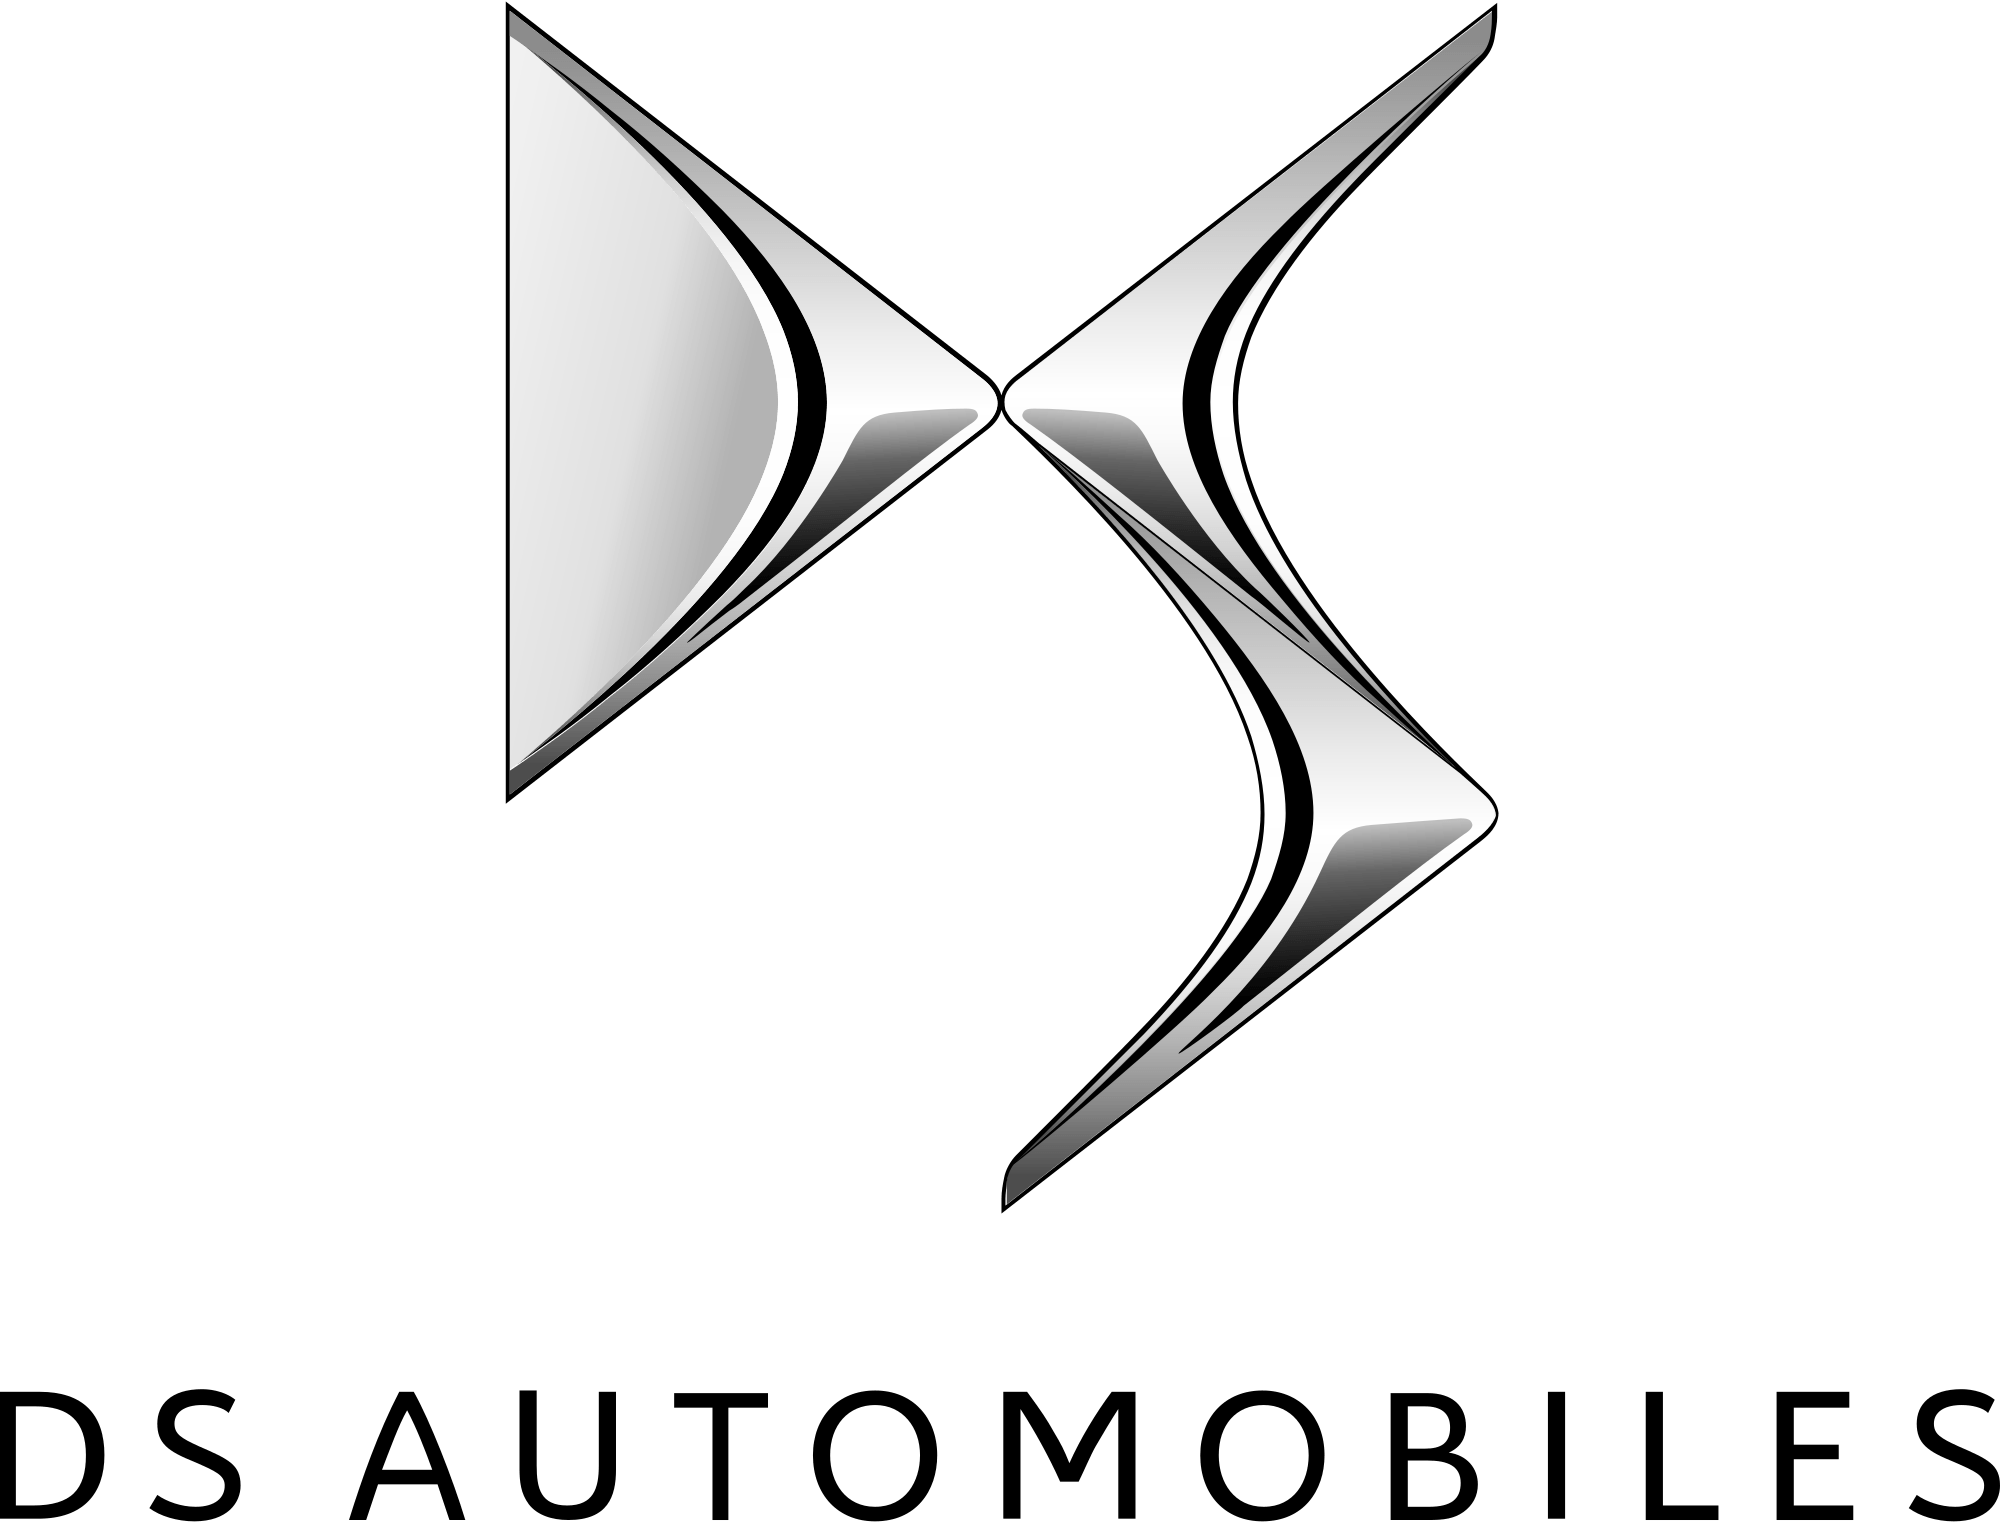 American Automotive Company Ka Logo - DS Automobiles